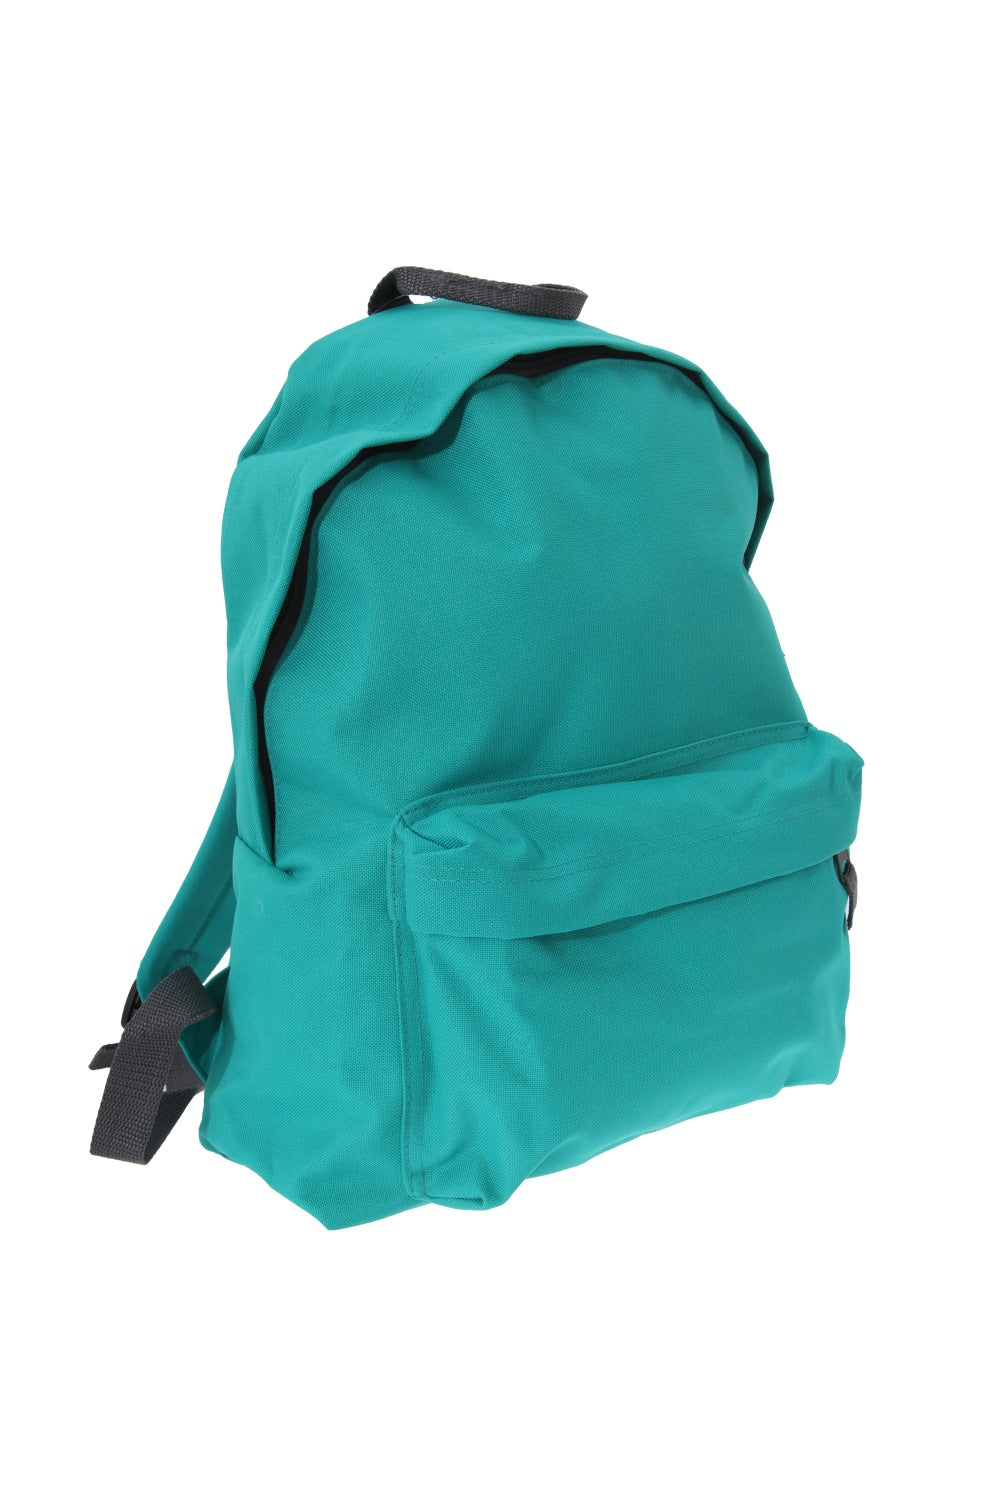 Fashion Backpack / Rucksack (18 Liters) (Emerald/Graphite Gray)